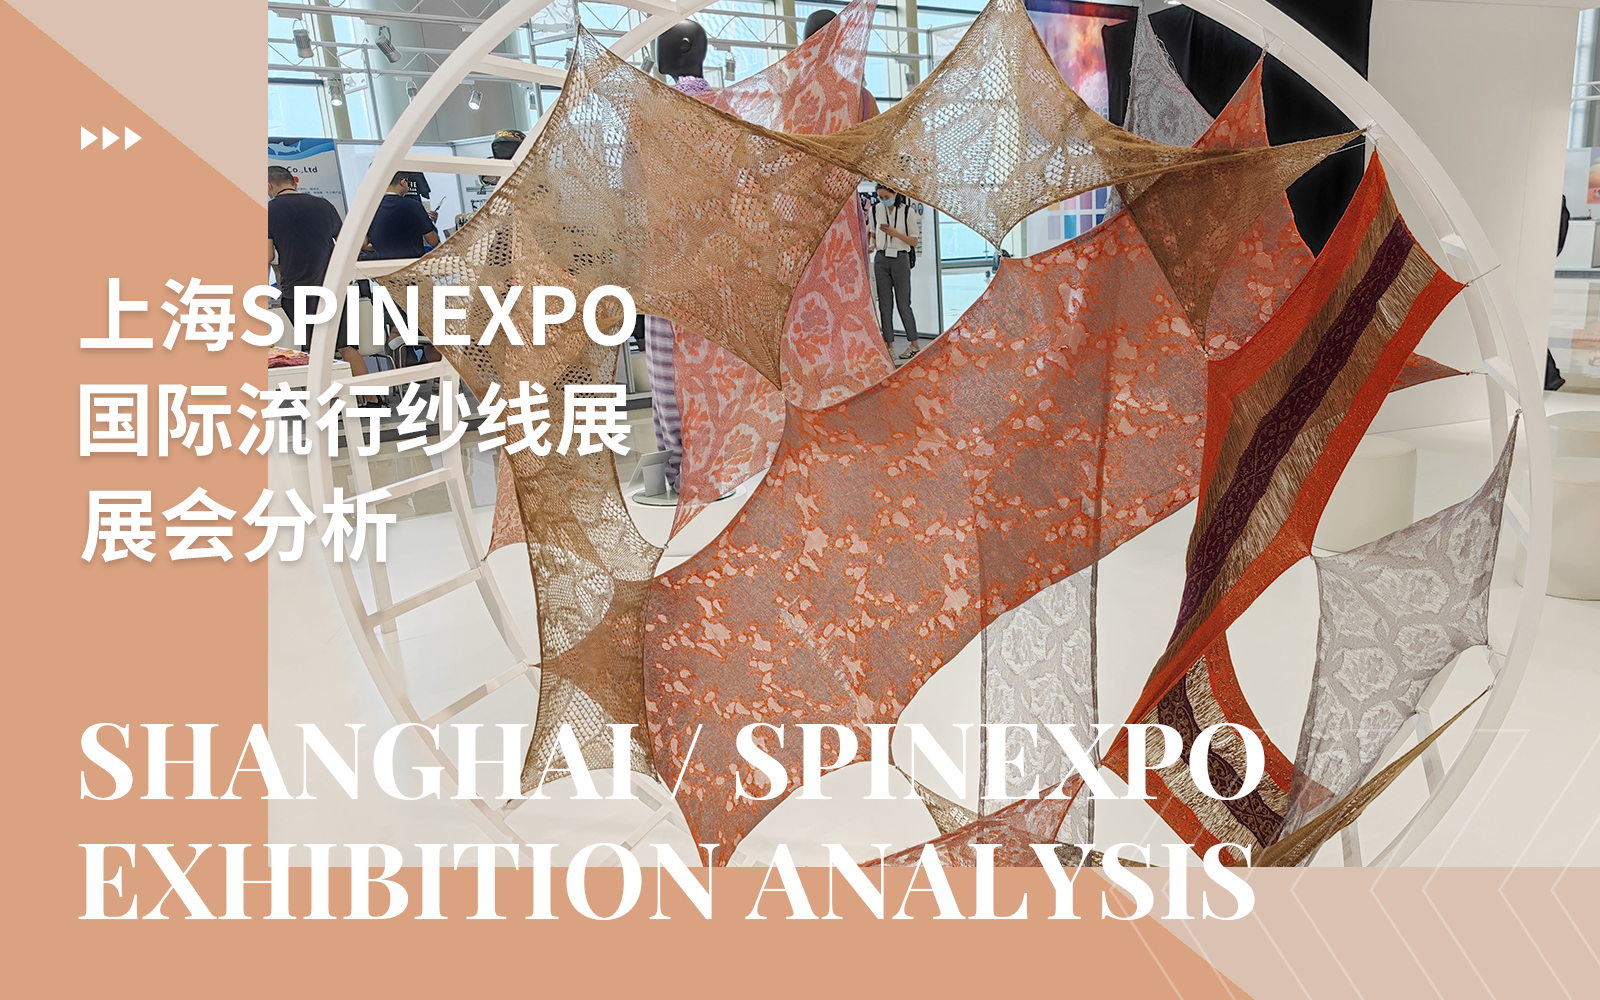 Turbulences -- The Analysis of 39th Spinexpo Shanghai(Part II)